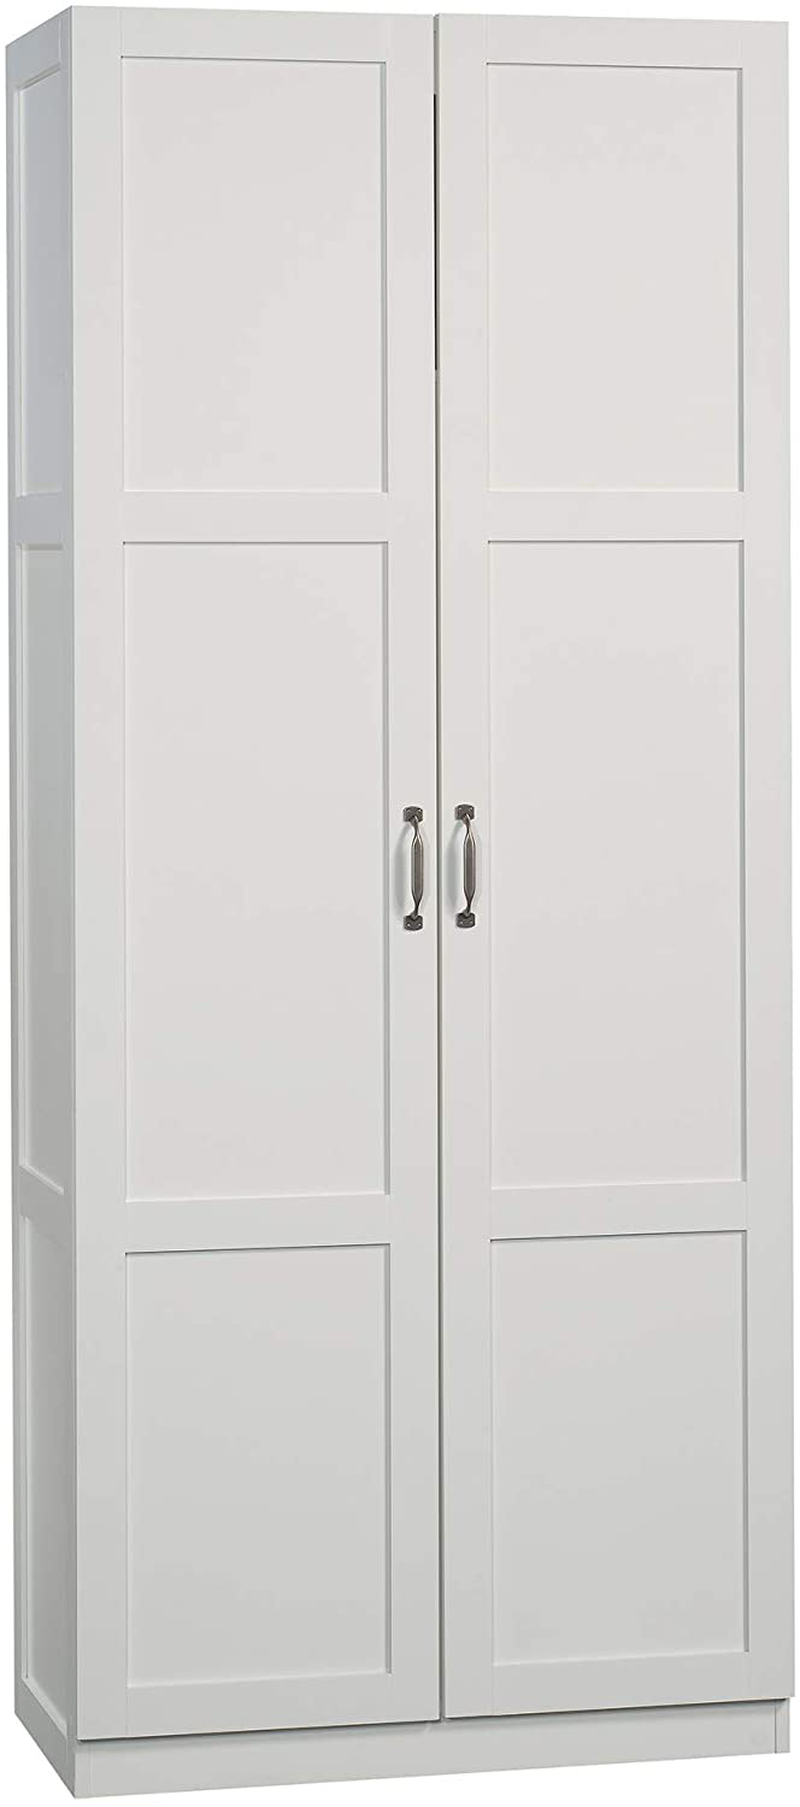 Sauder Select Storage Cabinet, L: 29.61" X W: 16.02" X H: 71.50", Soft White Finish Home & Garden > Kitchen & Dining > Food Storage Sauder Soft White Finish Storage Cabinet 